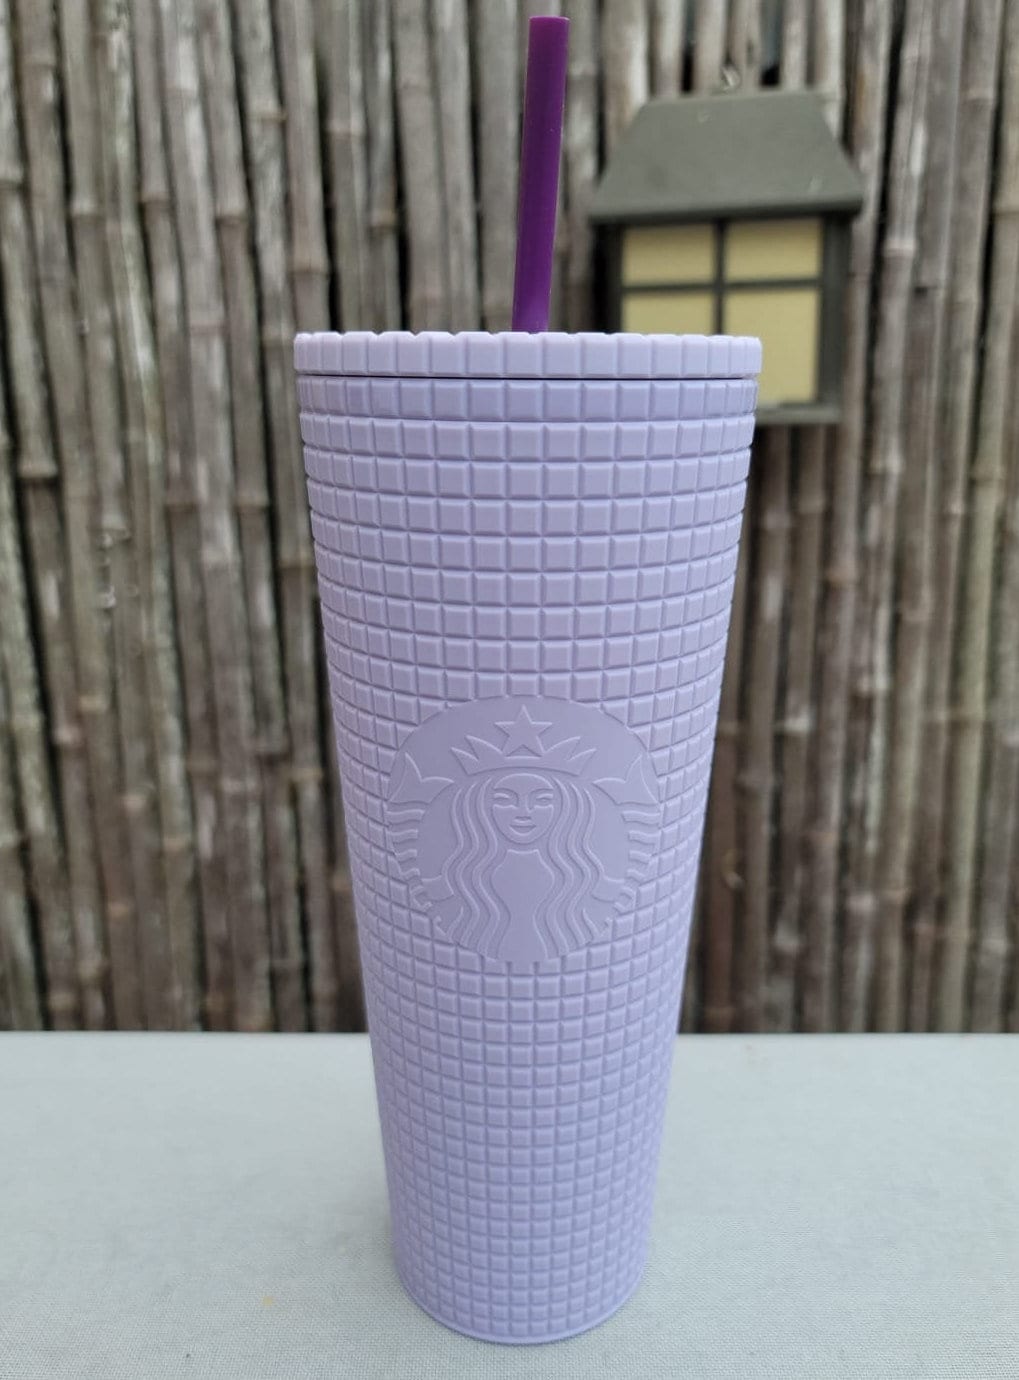 Starbucks Studded Matte Lilac Purple Tumbler Cold Cup, Grande 16 oz 